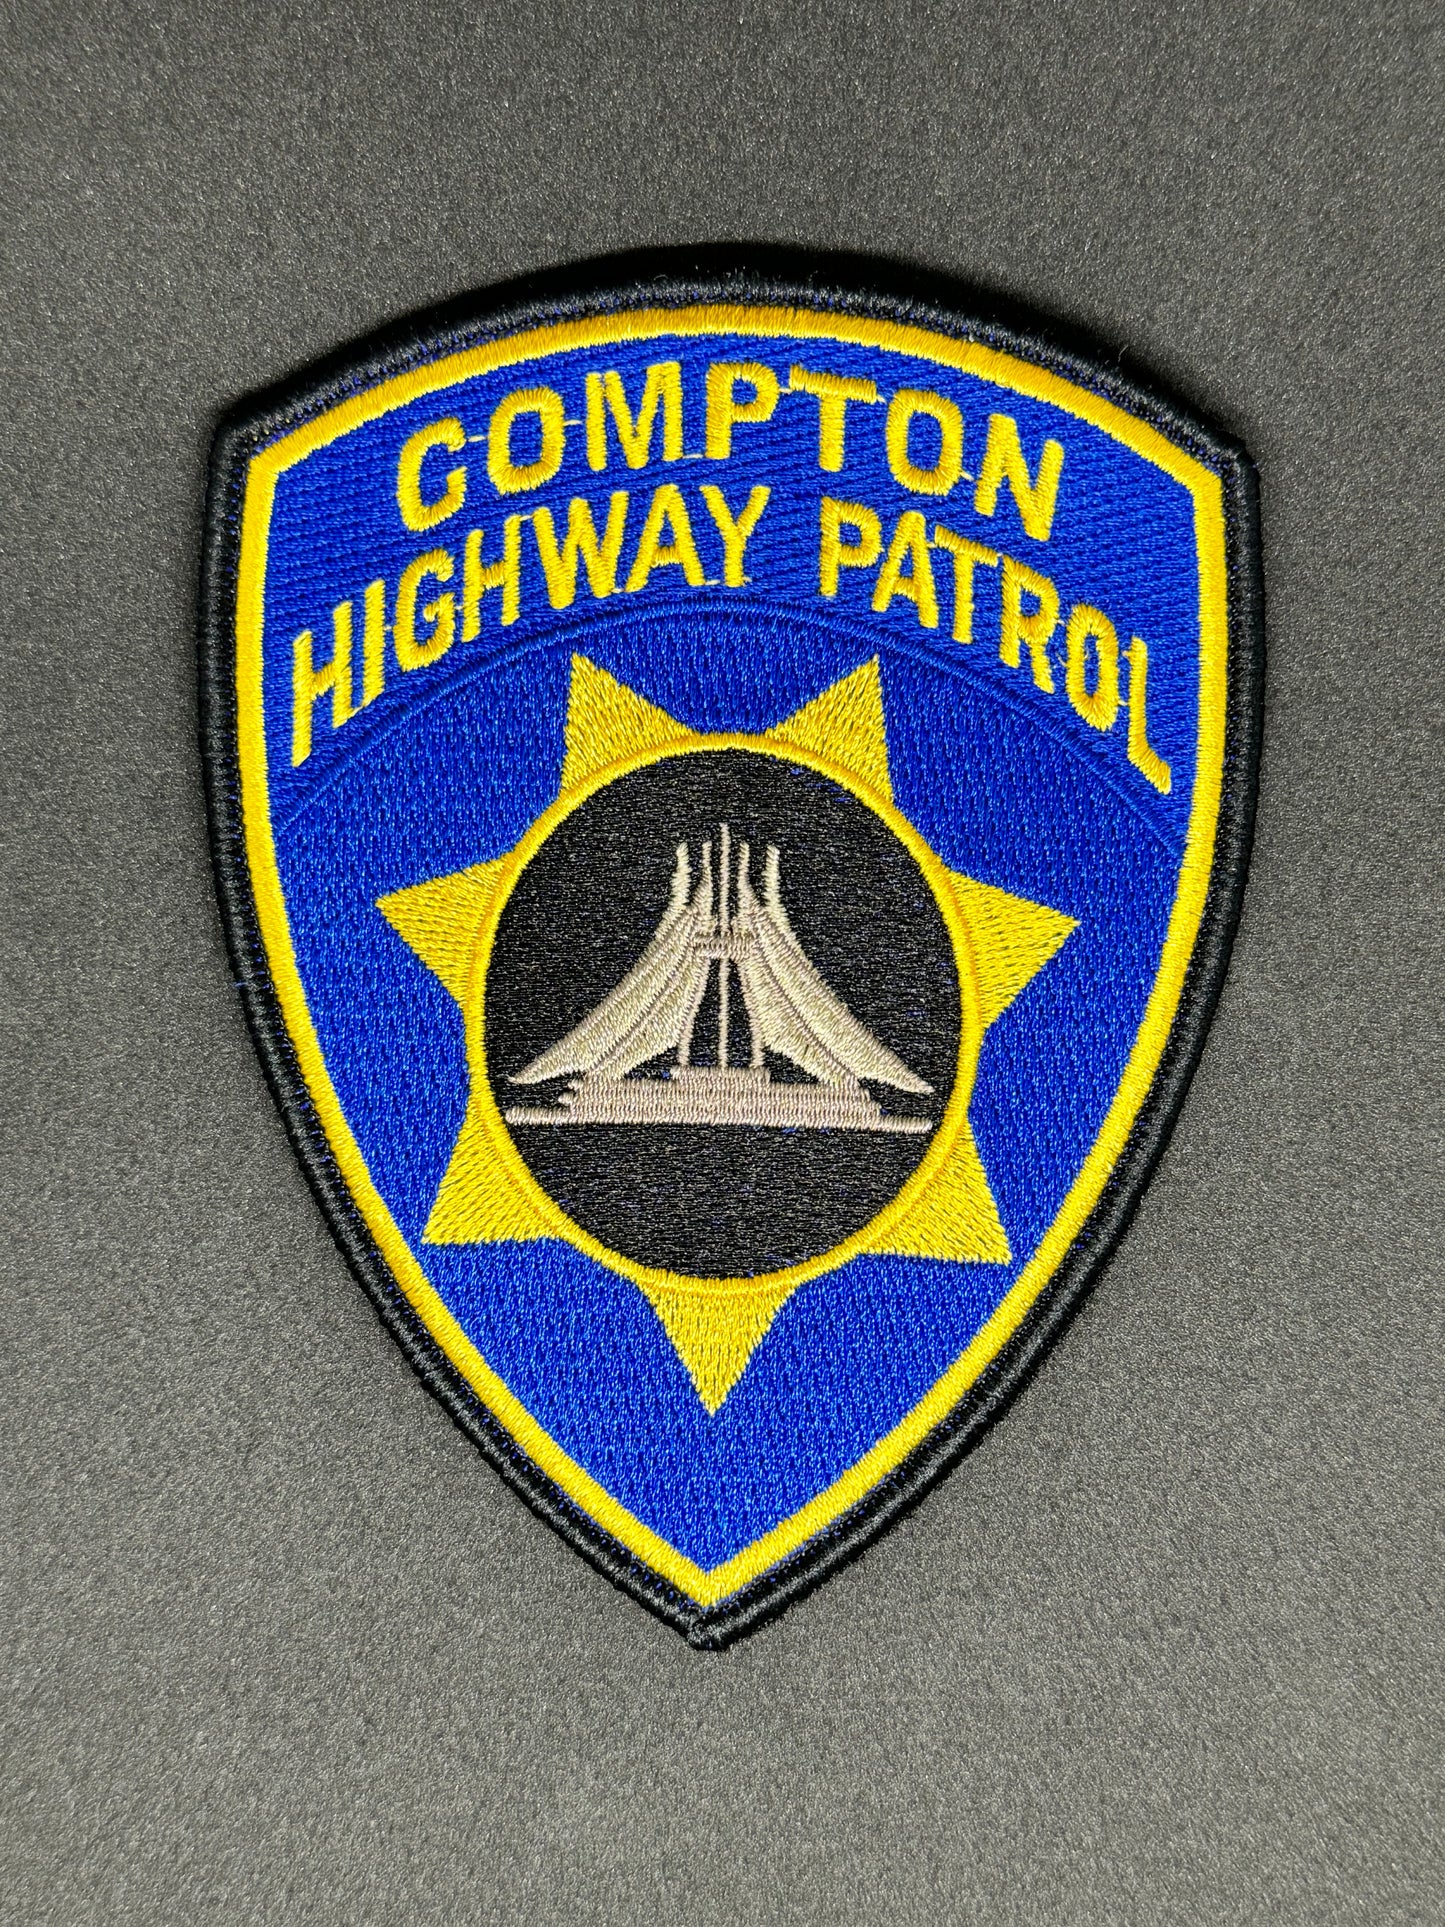 Compton Highway Patrol Patch